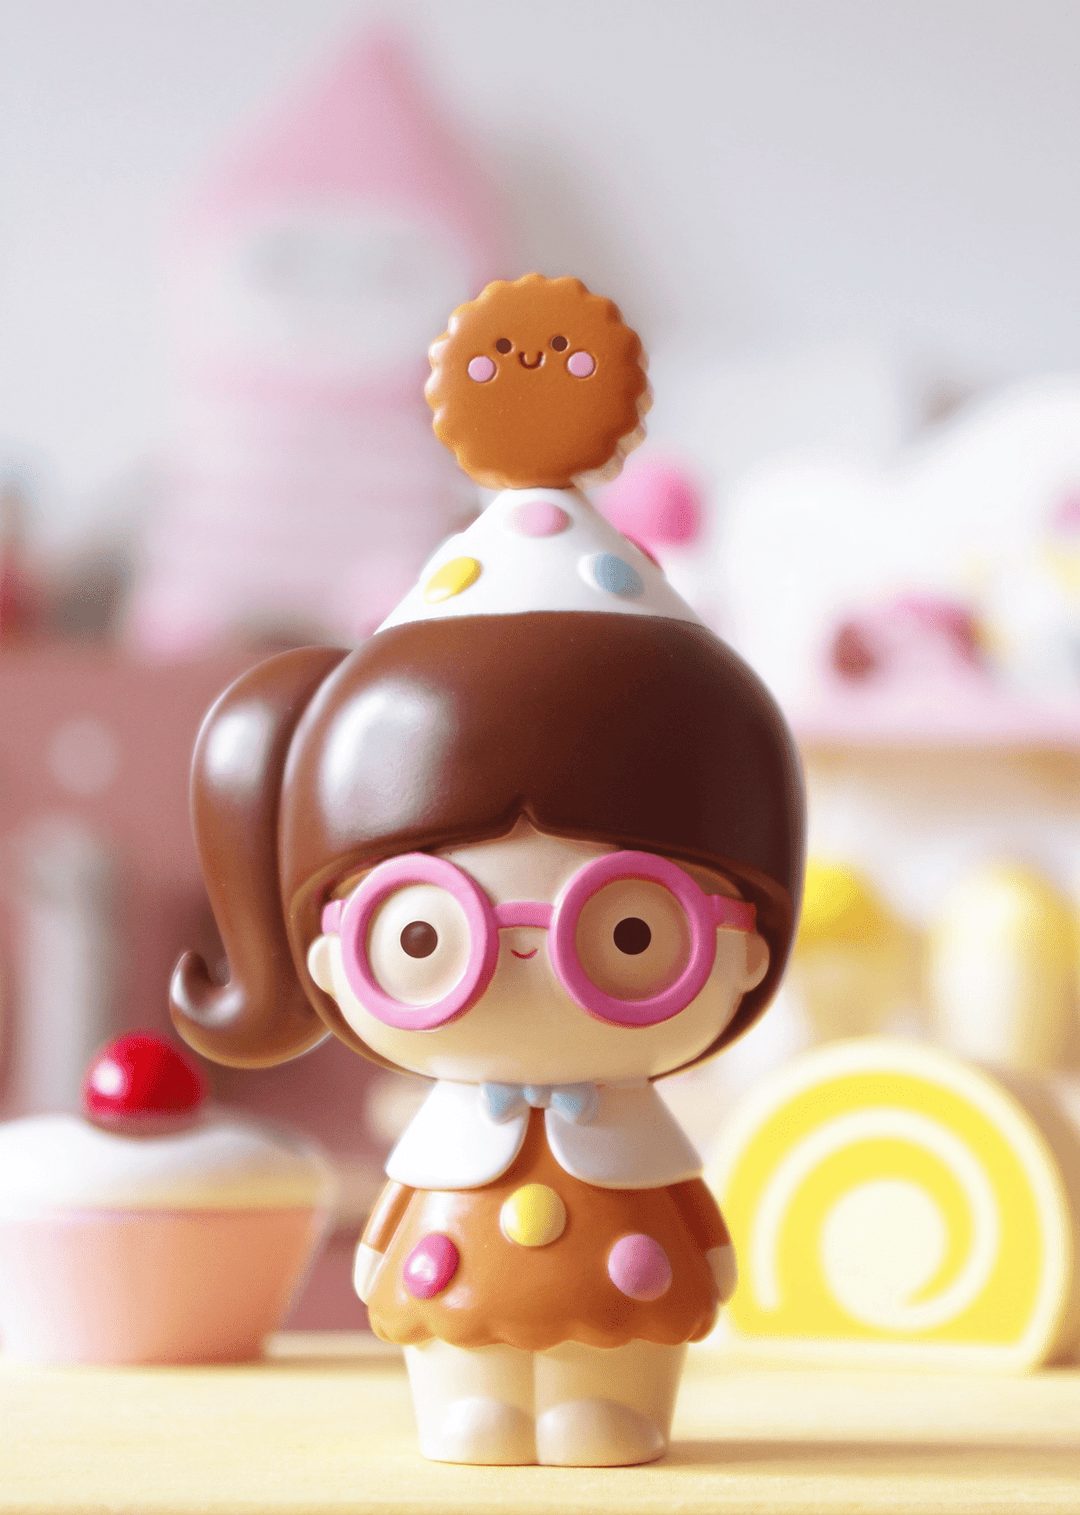 Smart Cookie by Momiji - Petite Belle